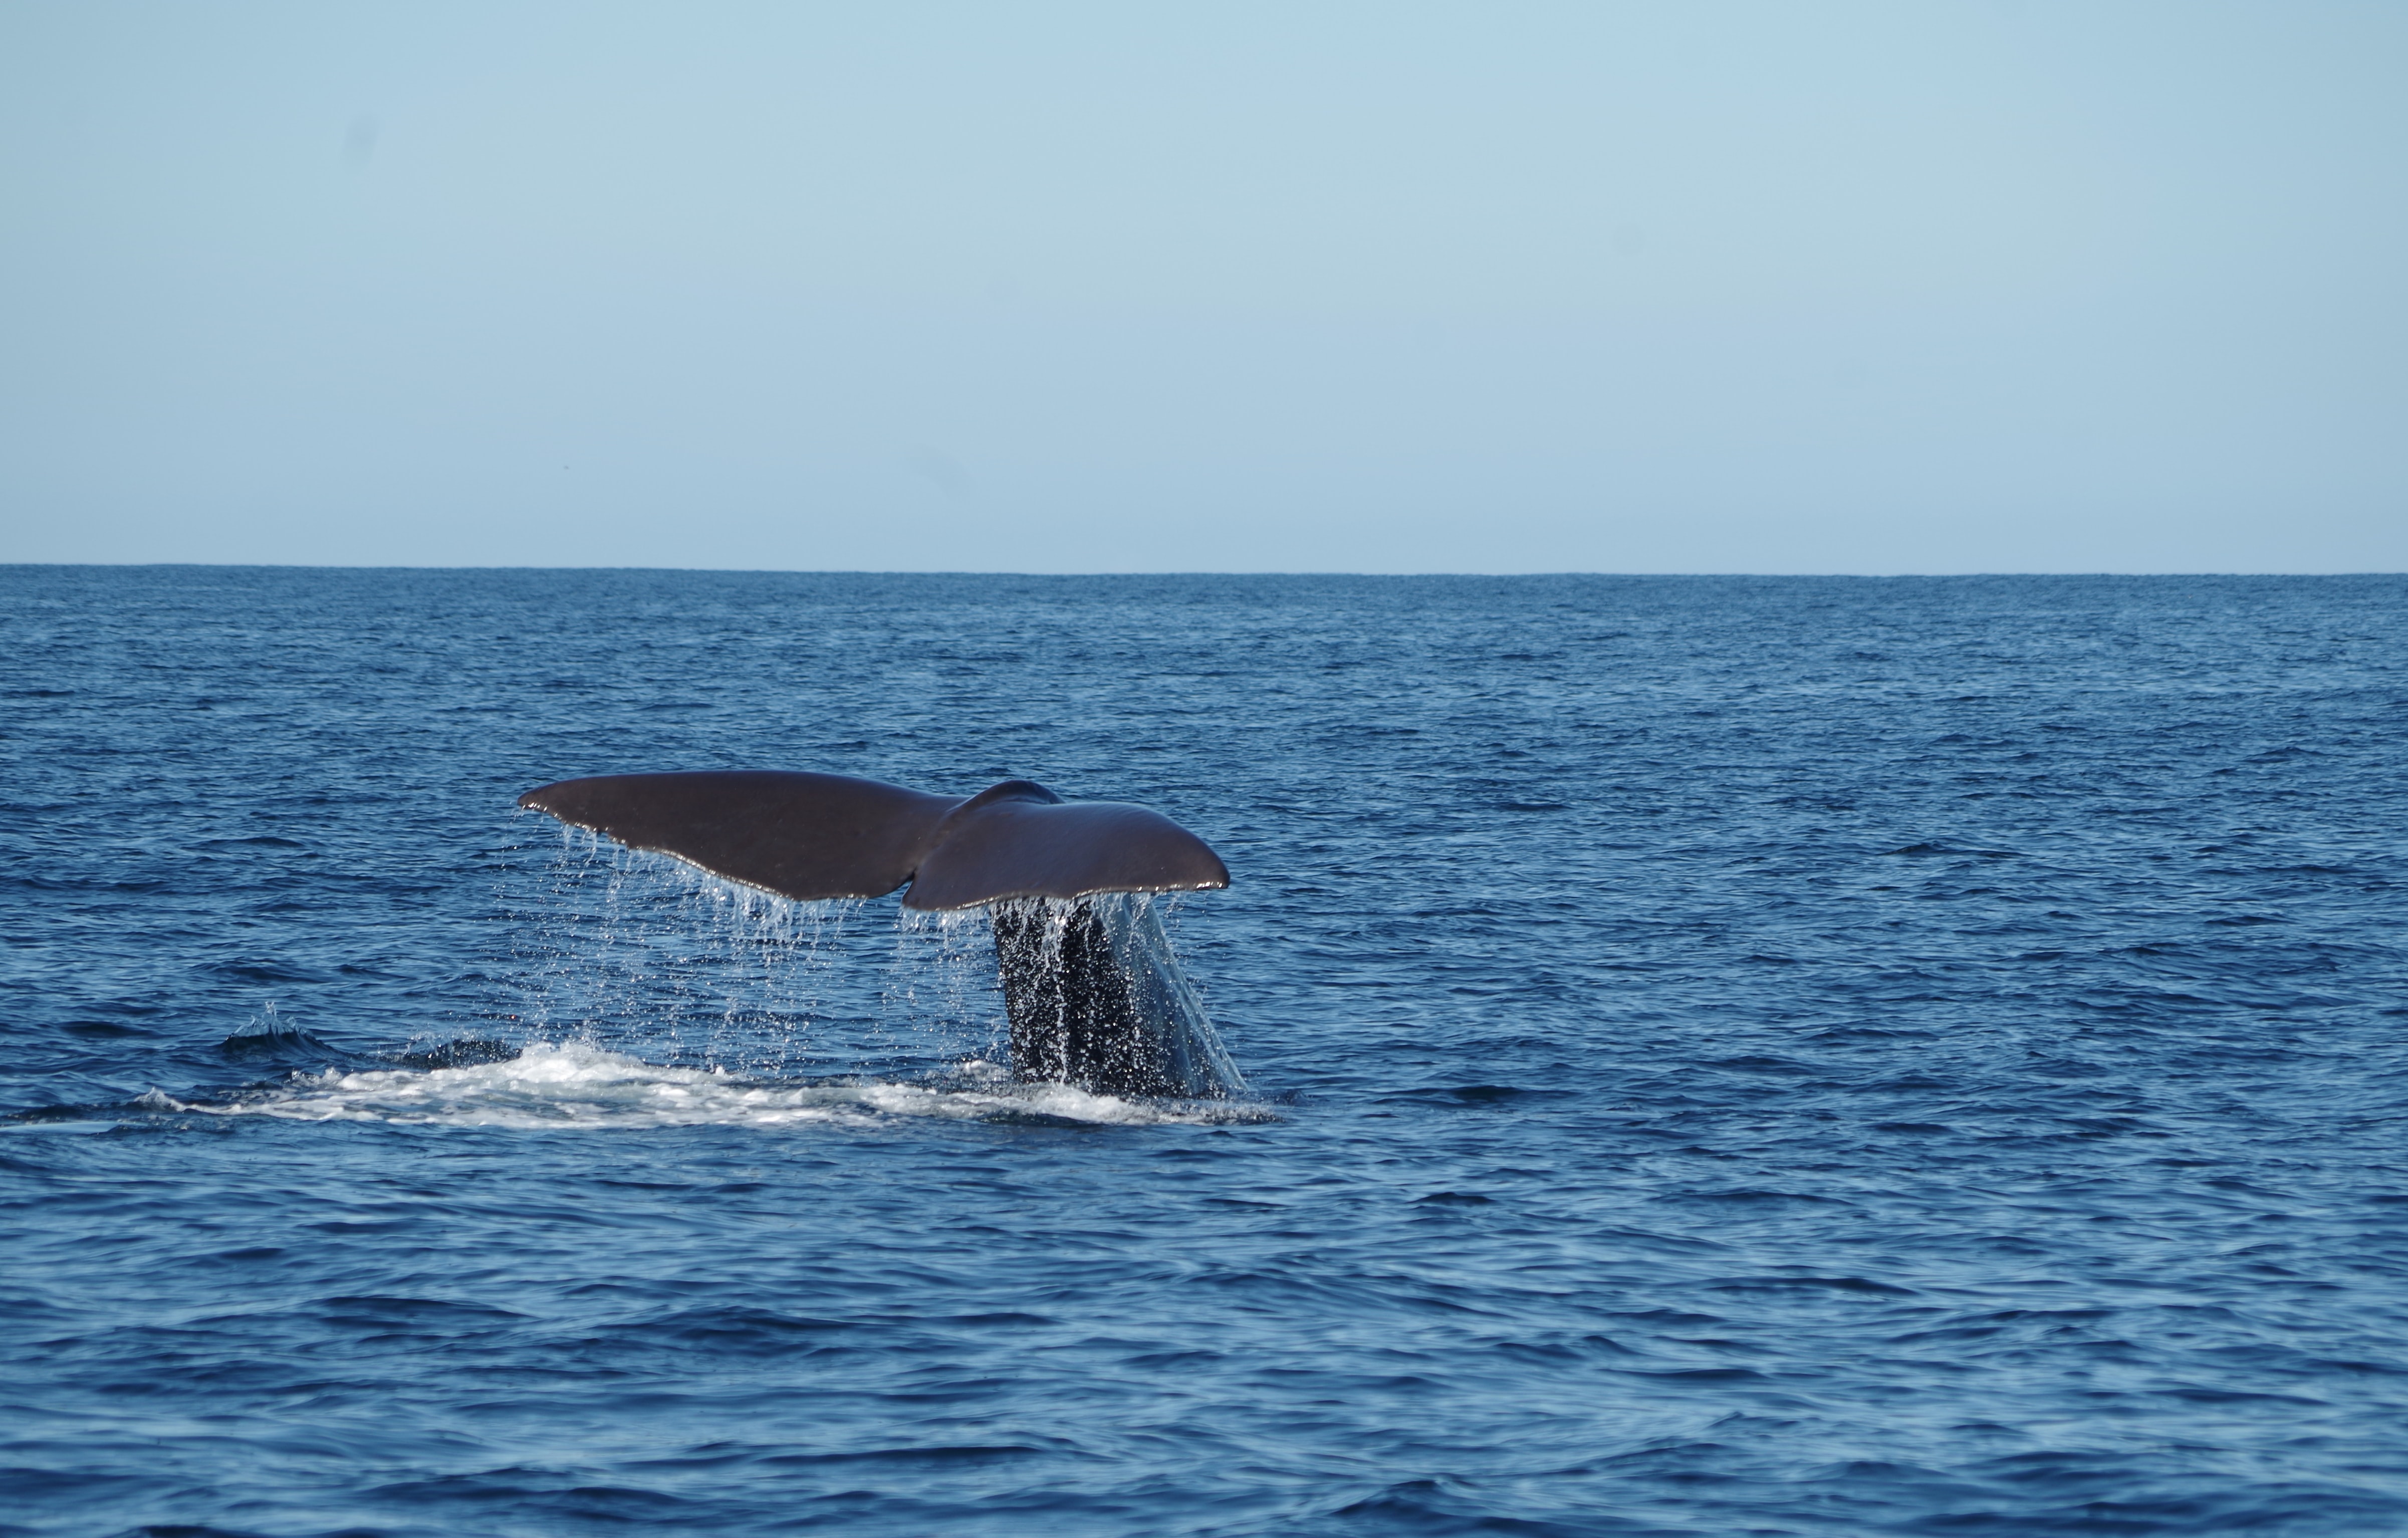 Kaikoura Sperm Whale - image courtesy Davide Dalfovo and Unsplash